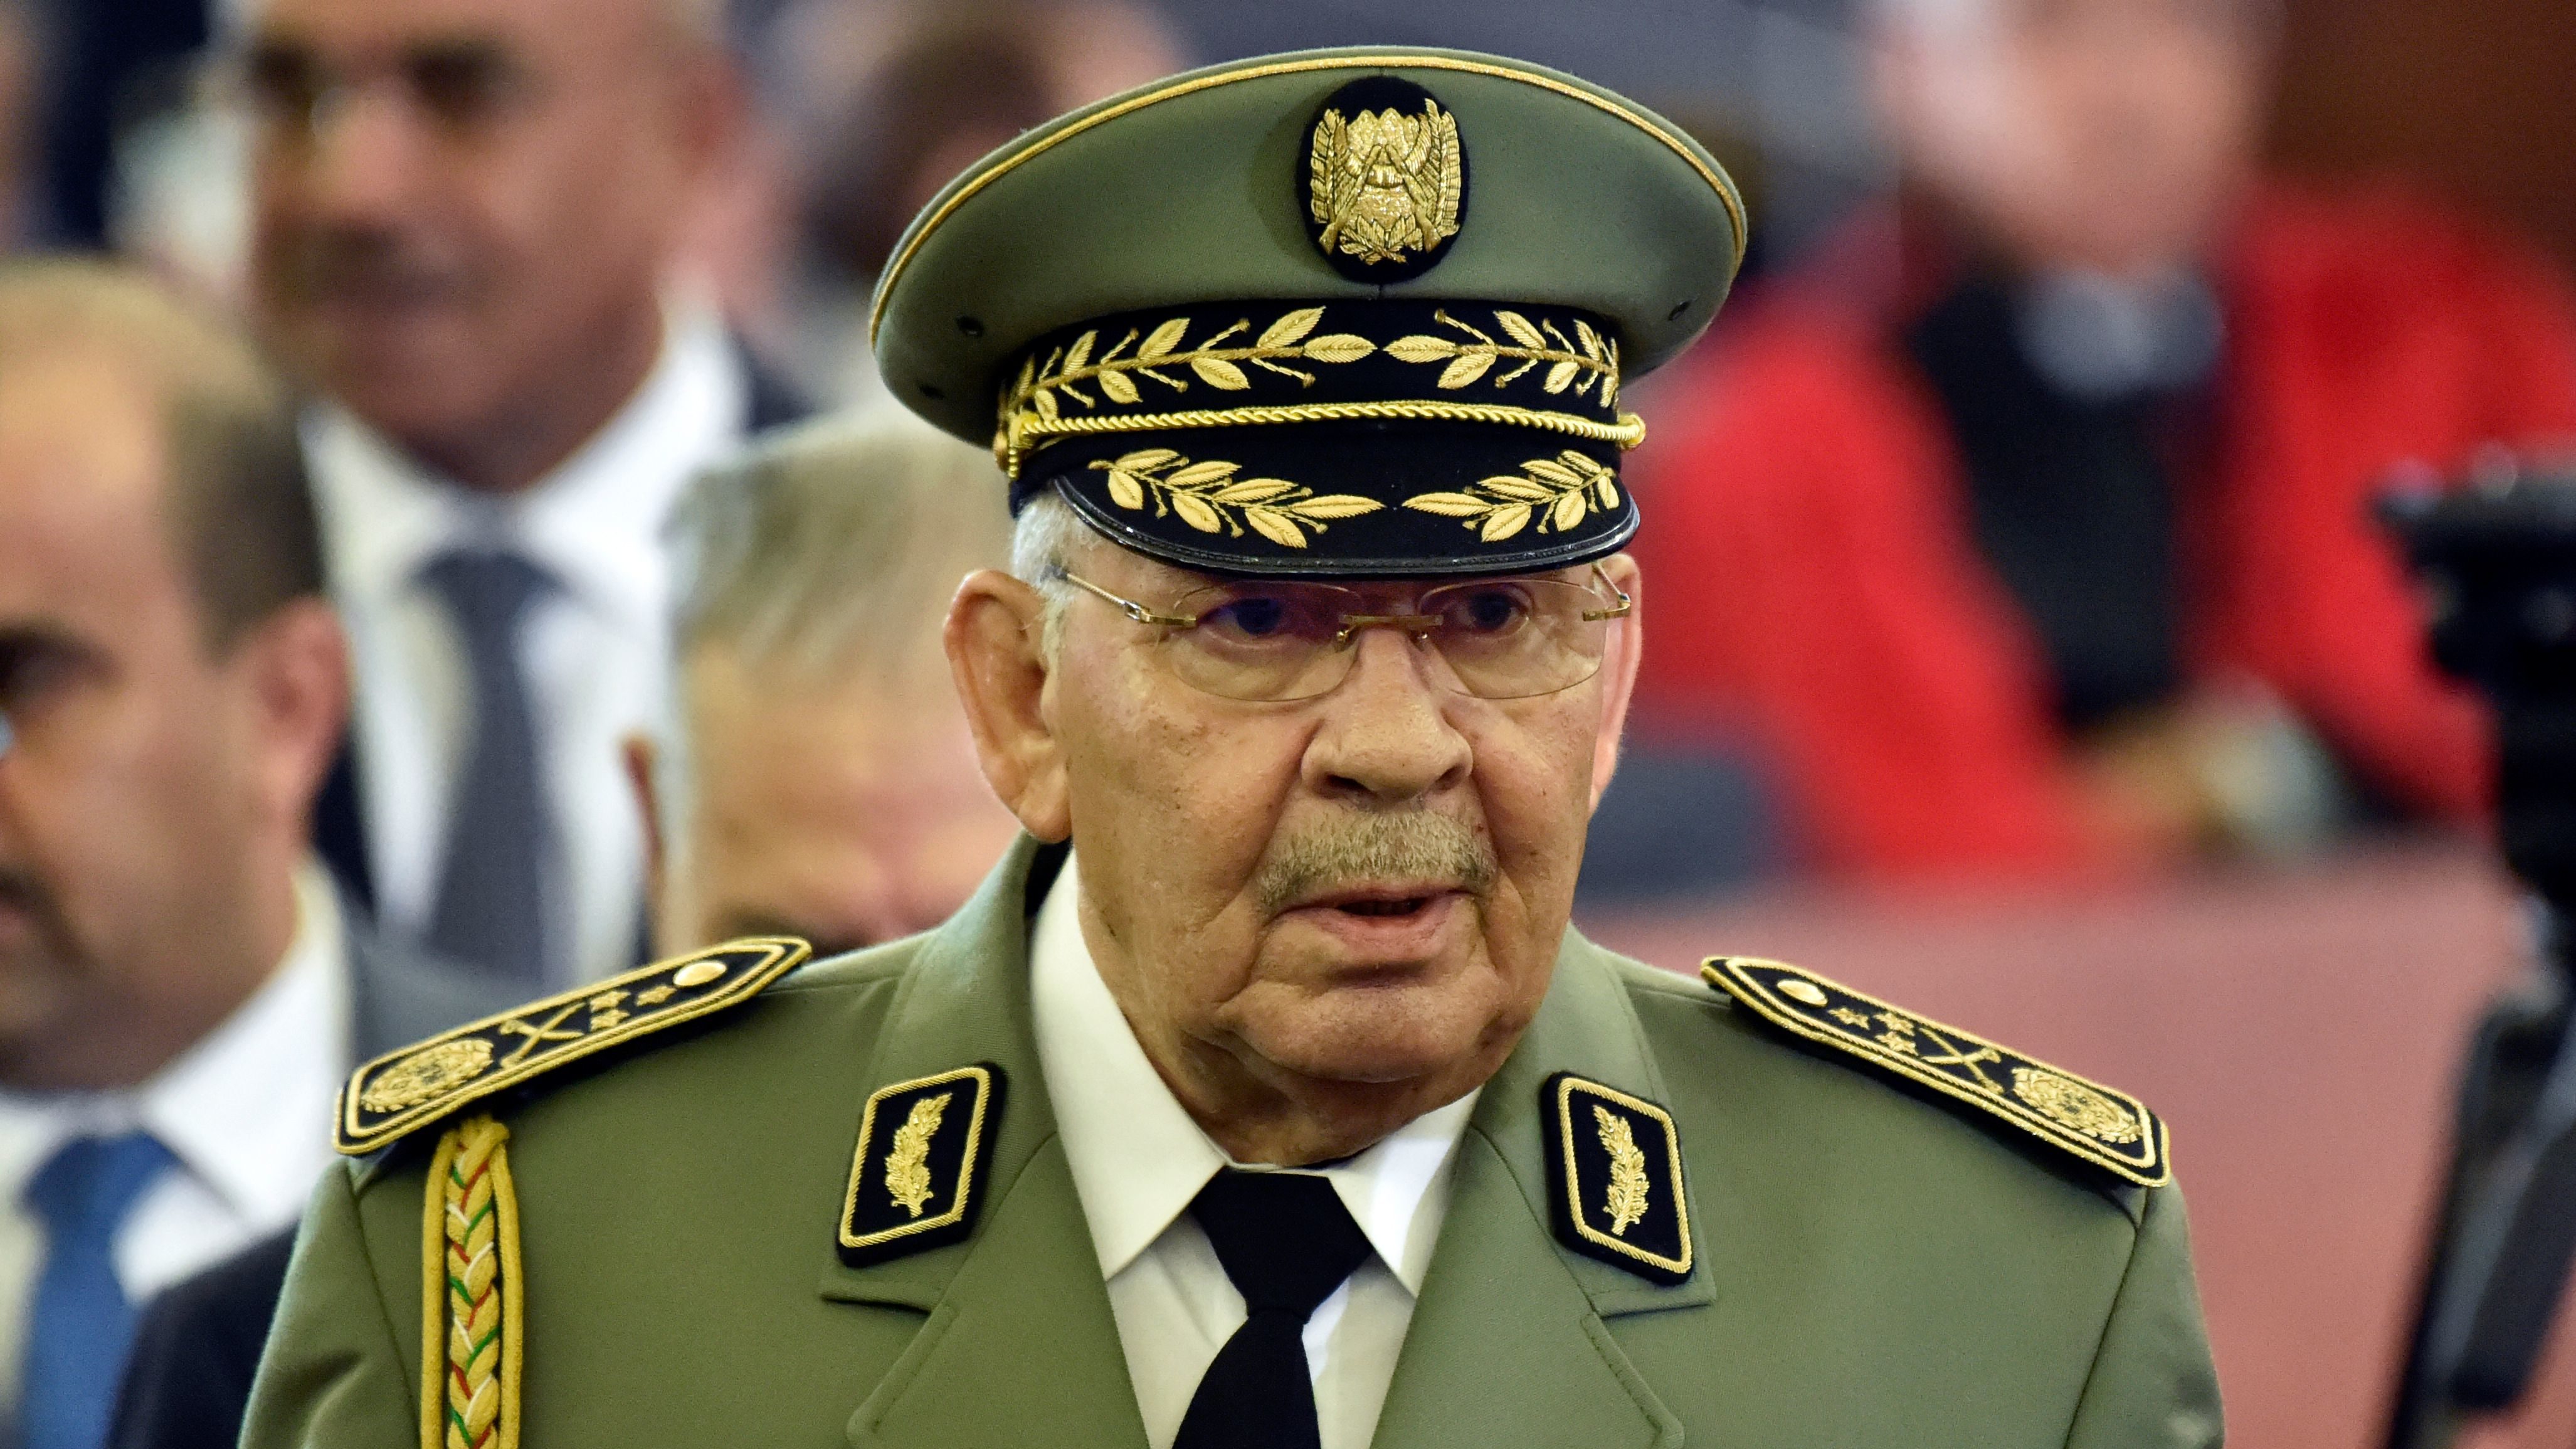 Algeria’s Powerful Army Chief Dies